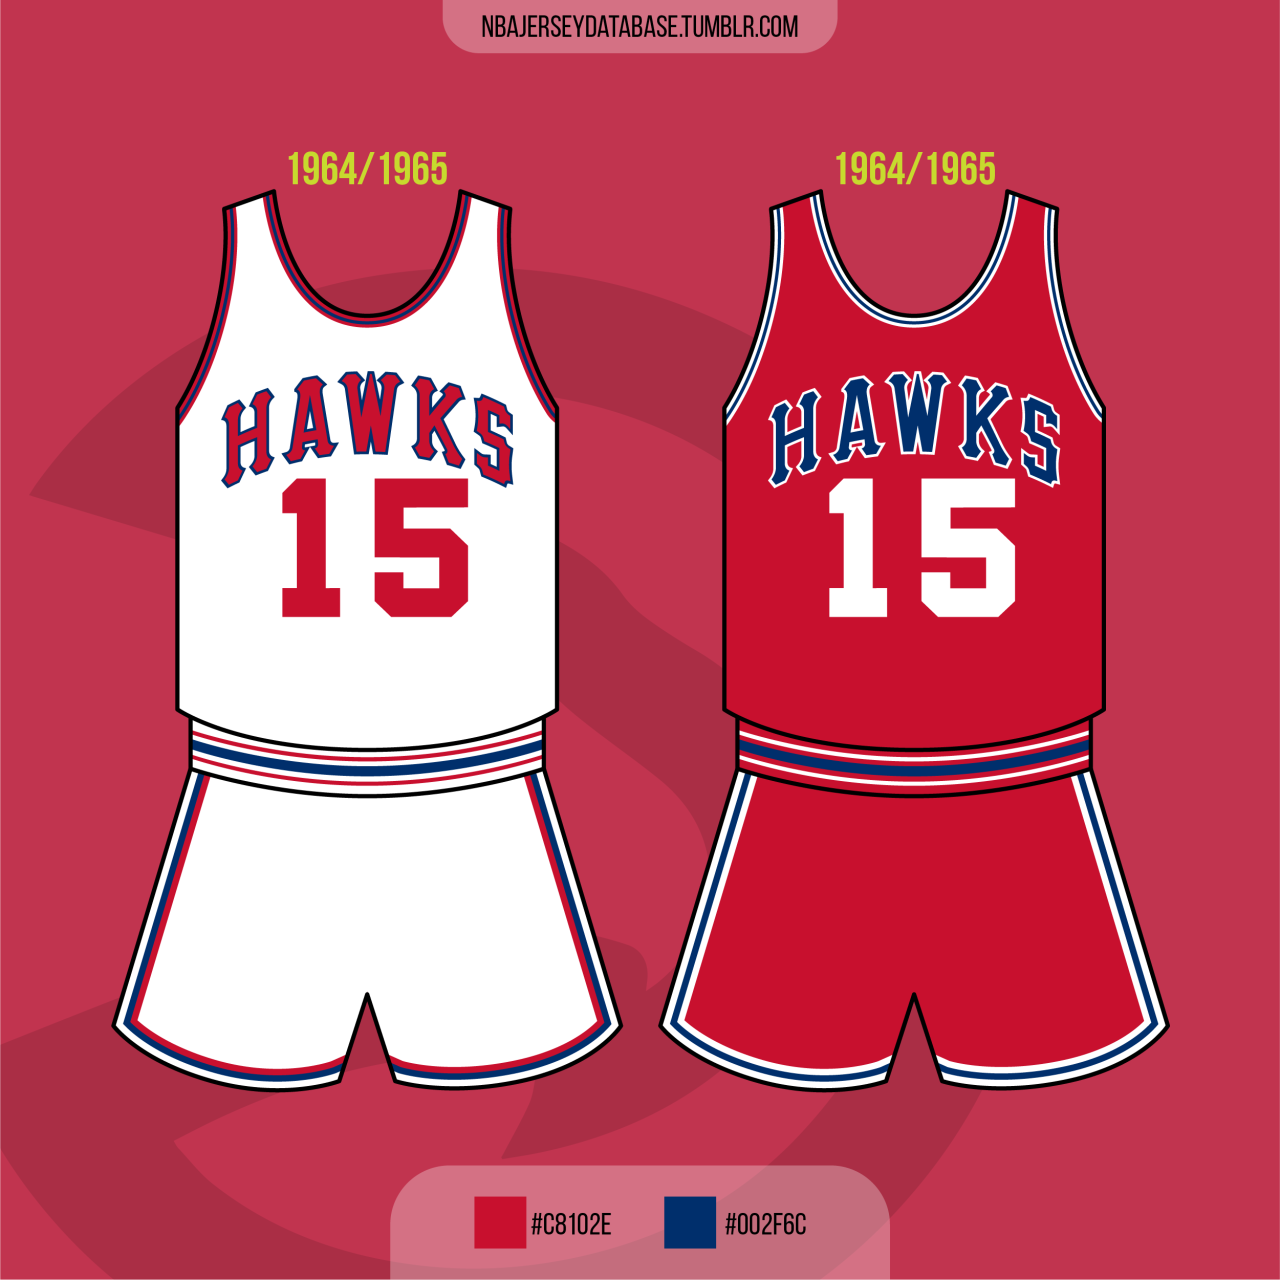 NBA Jersey Database, St. Louis Hawks 1964-1965 Record: 45-35 (56%)